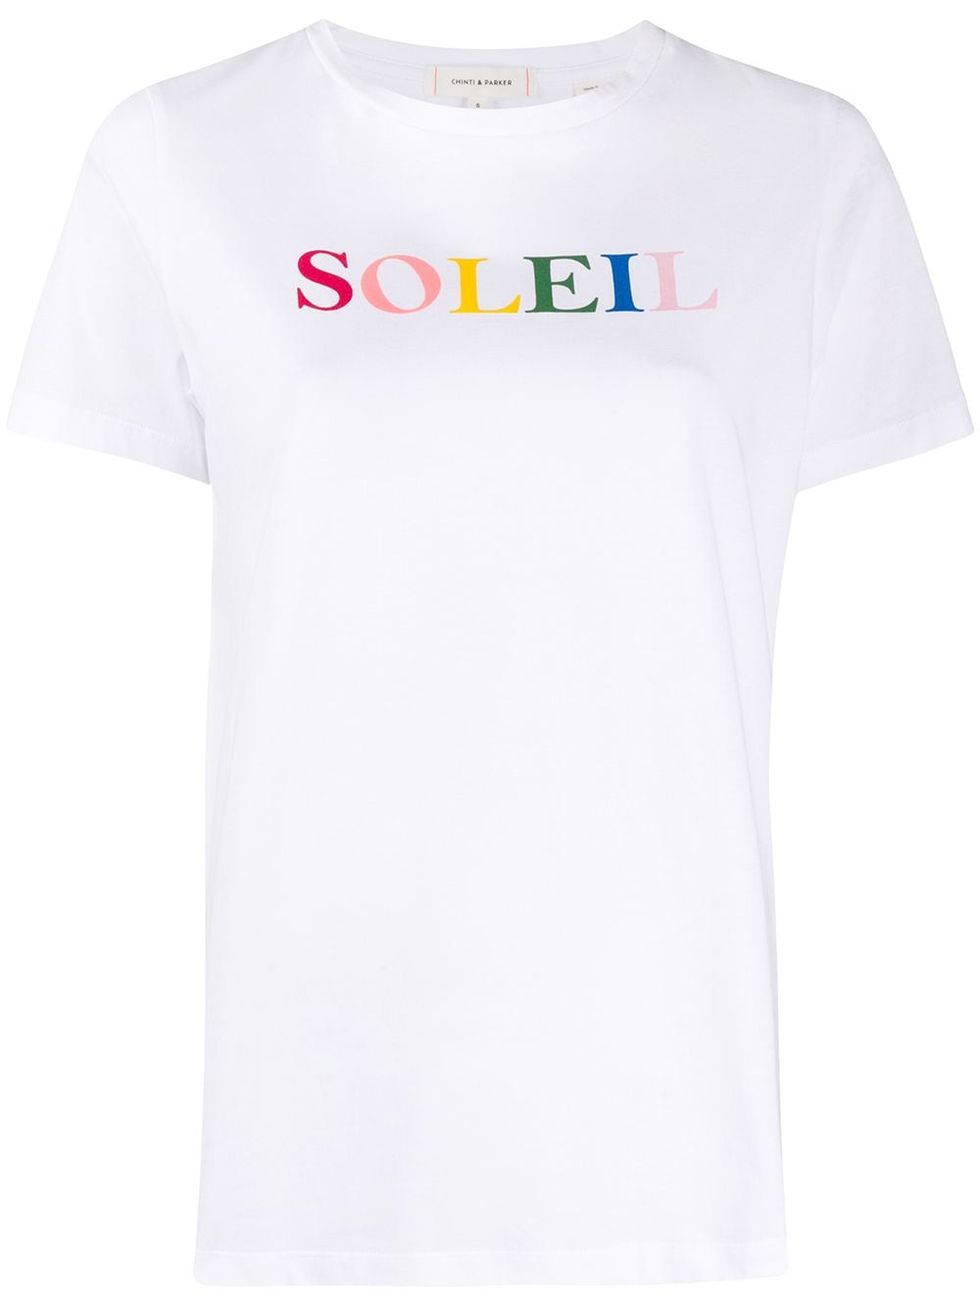 Soleil printed T-shirt